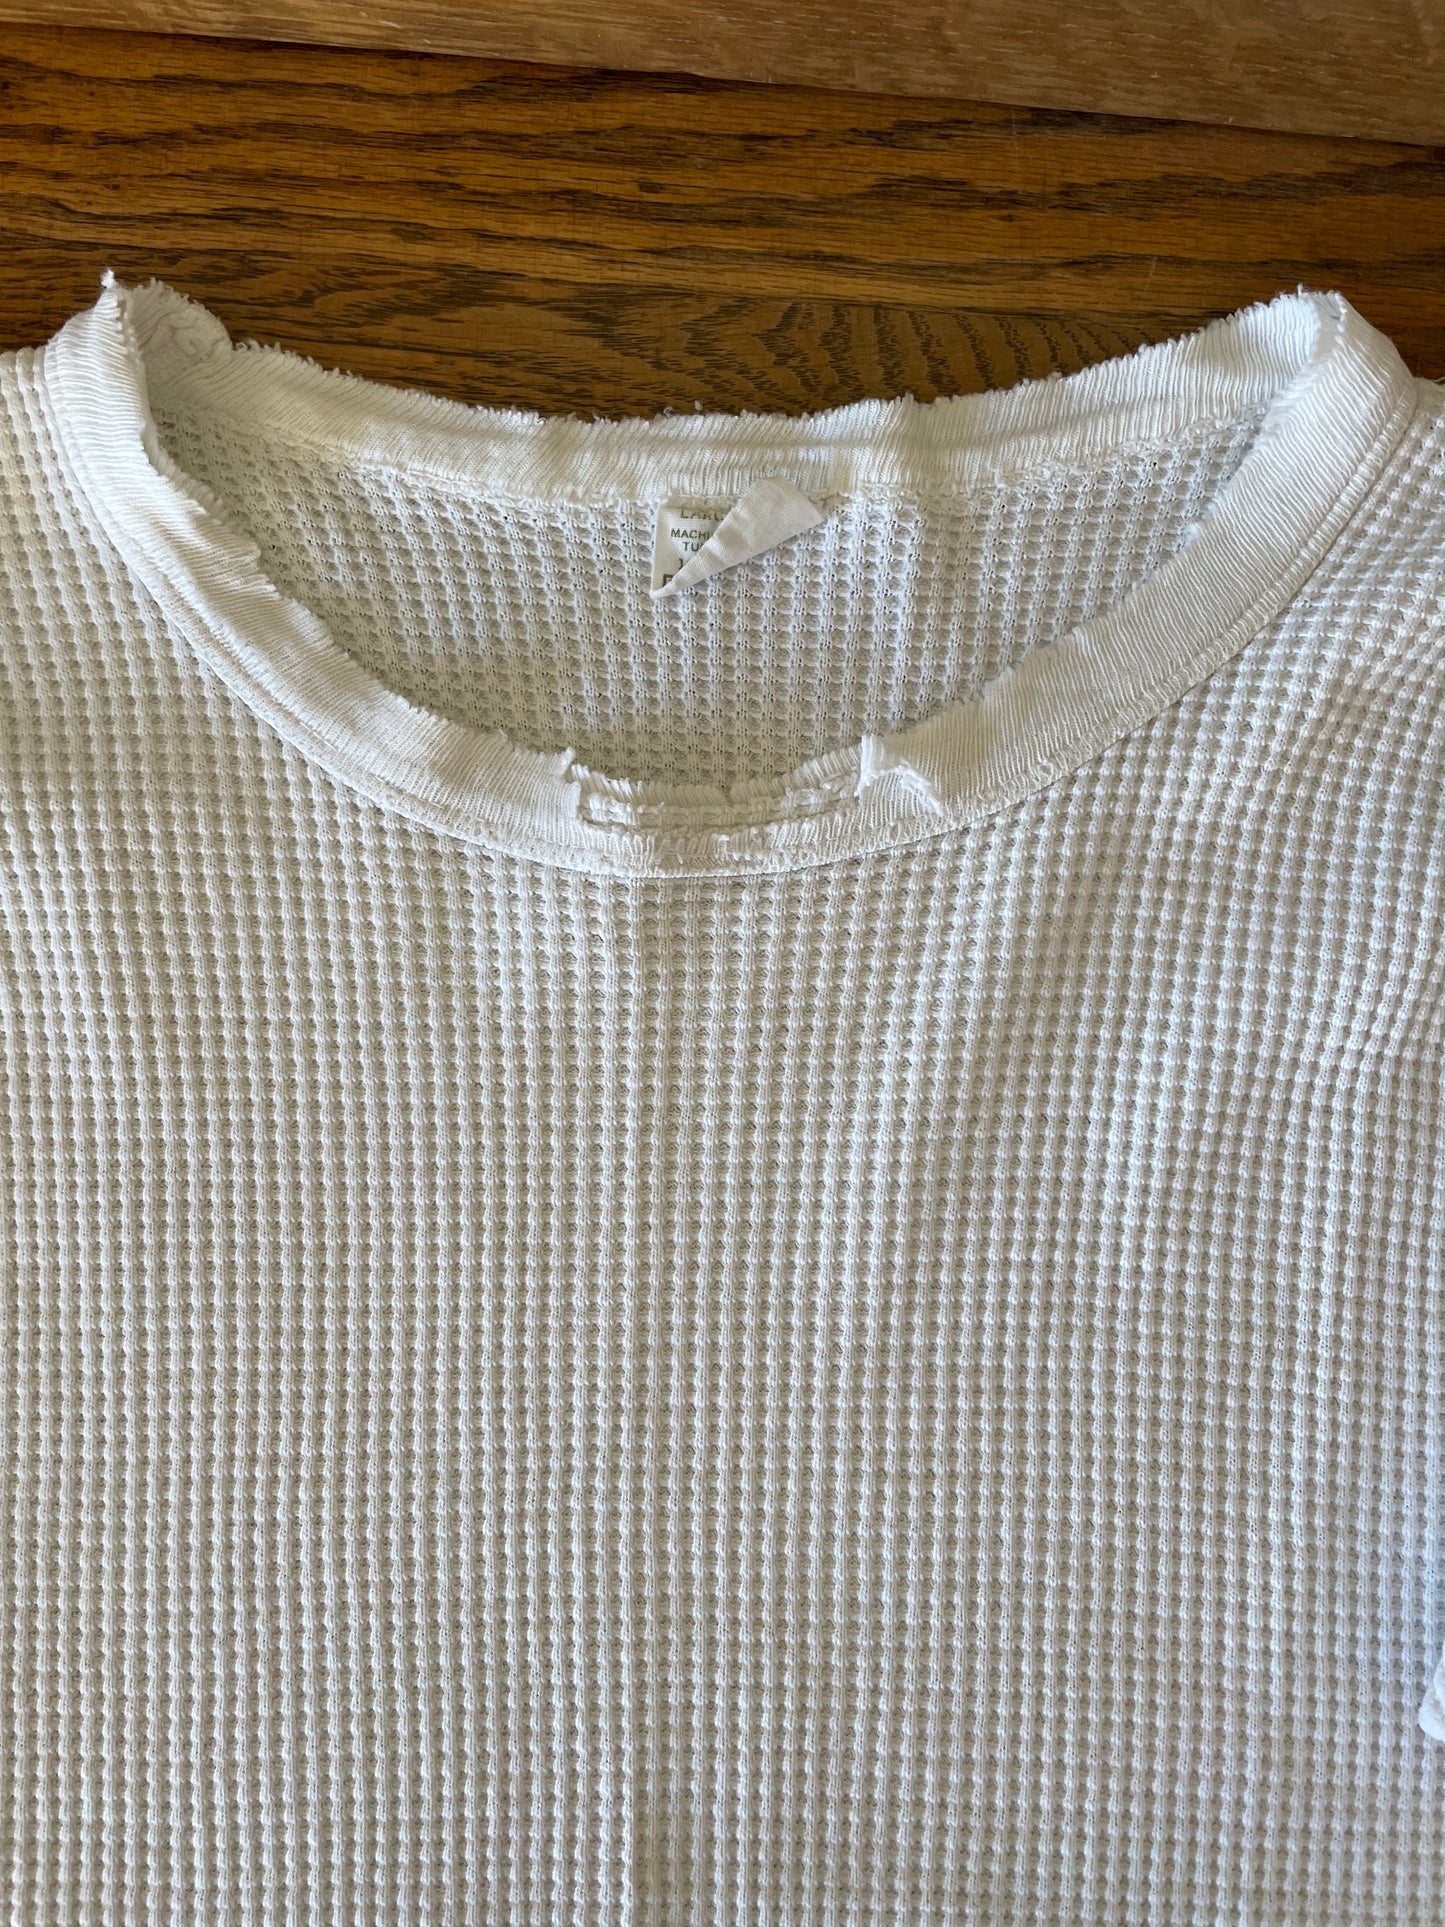 70s Sears Thermal Shirt